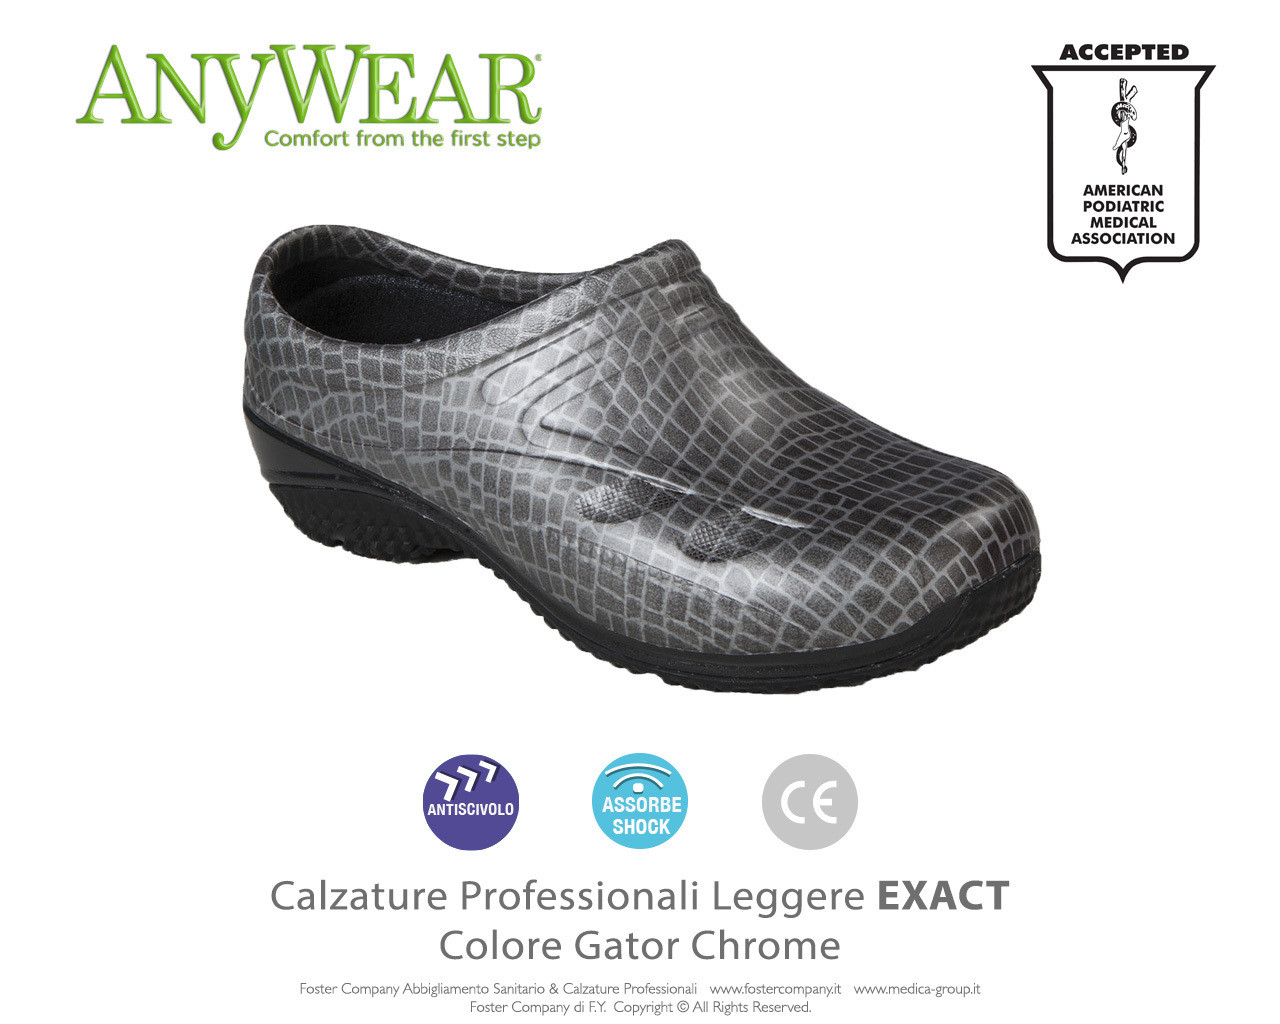 Calzature Professionali Anywear EXACT Colore Gator Chrome - FINE SERIE